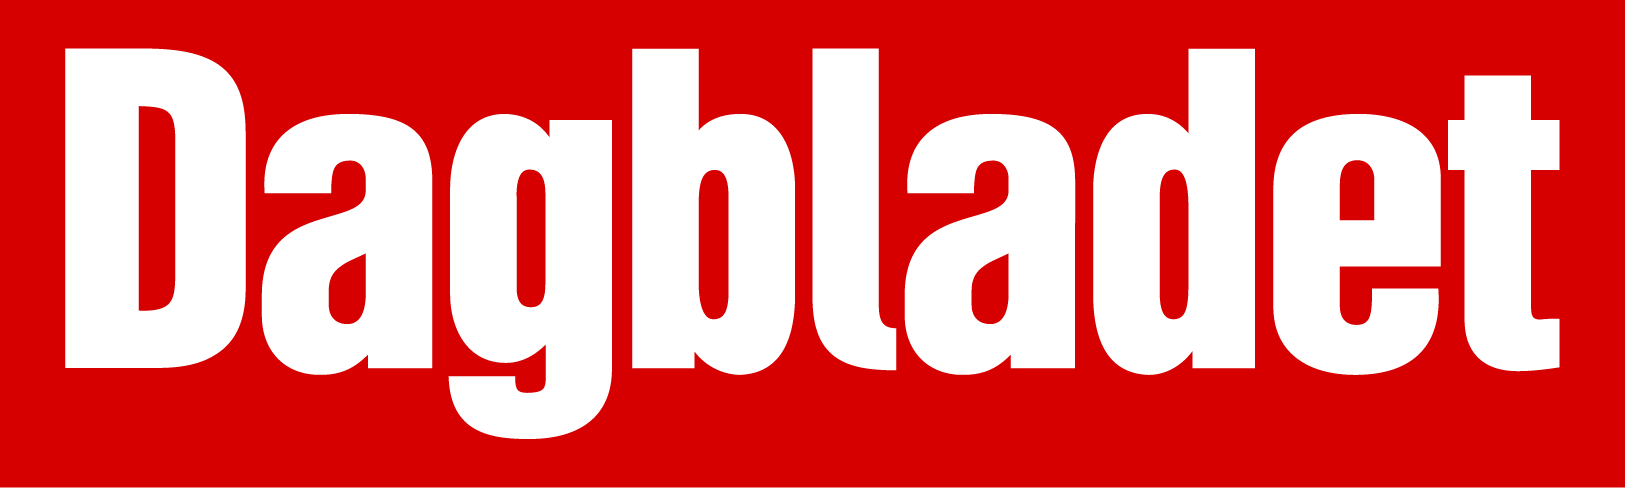 dagbladet-logo-rgb-01.png